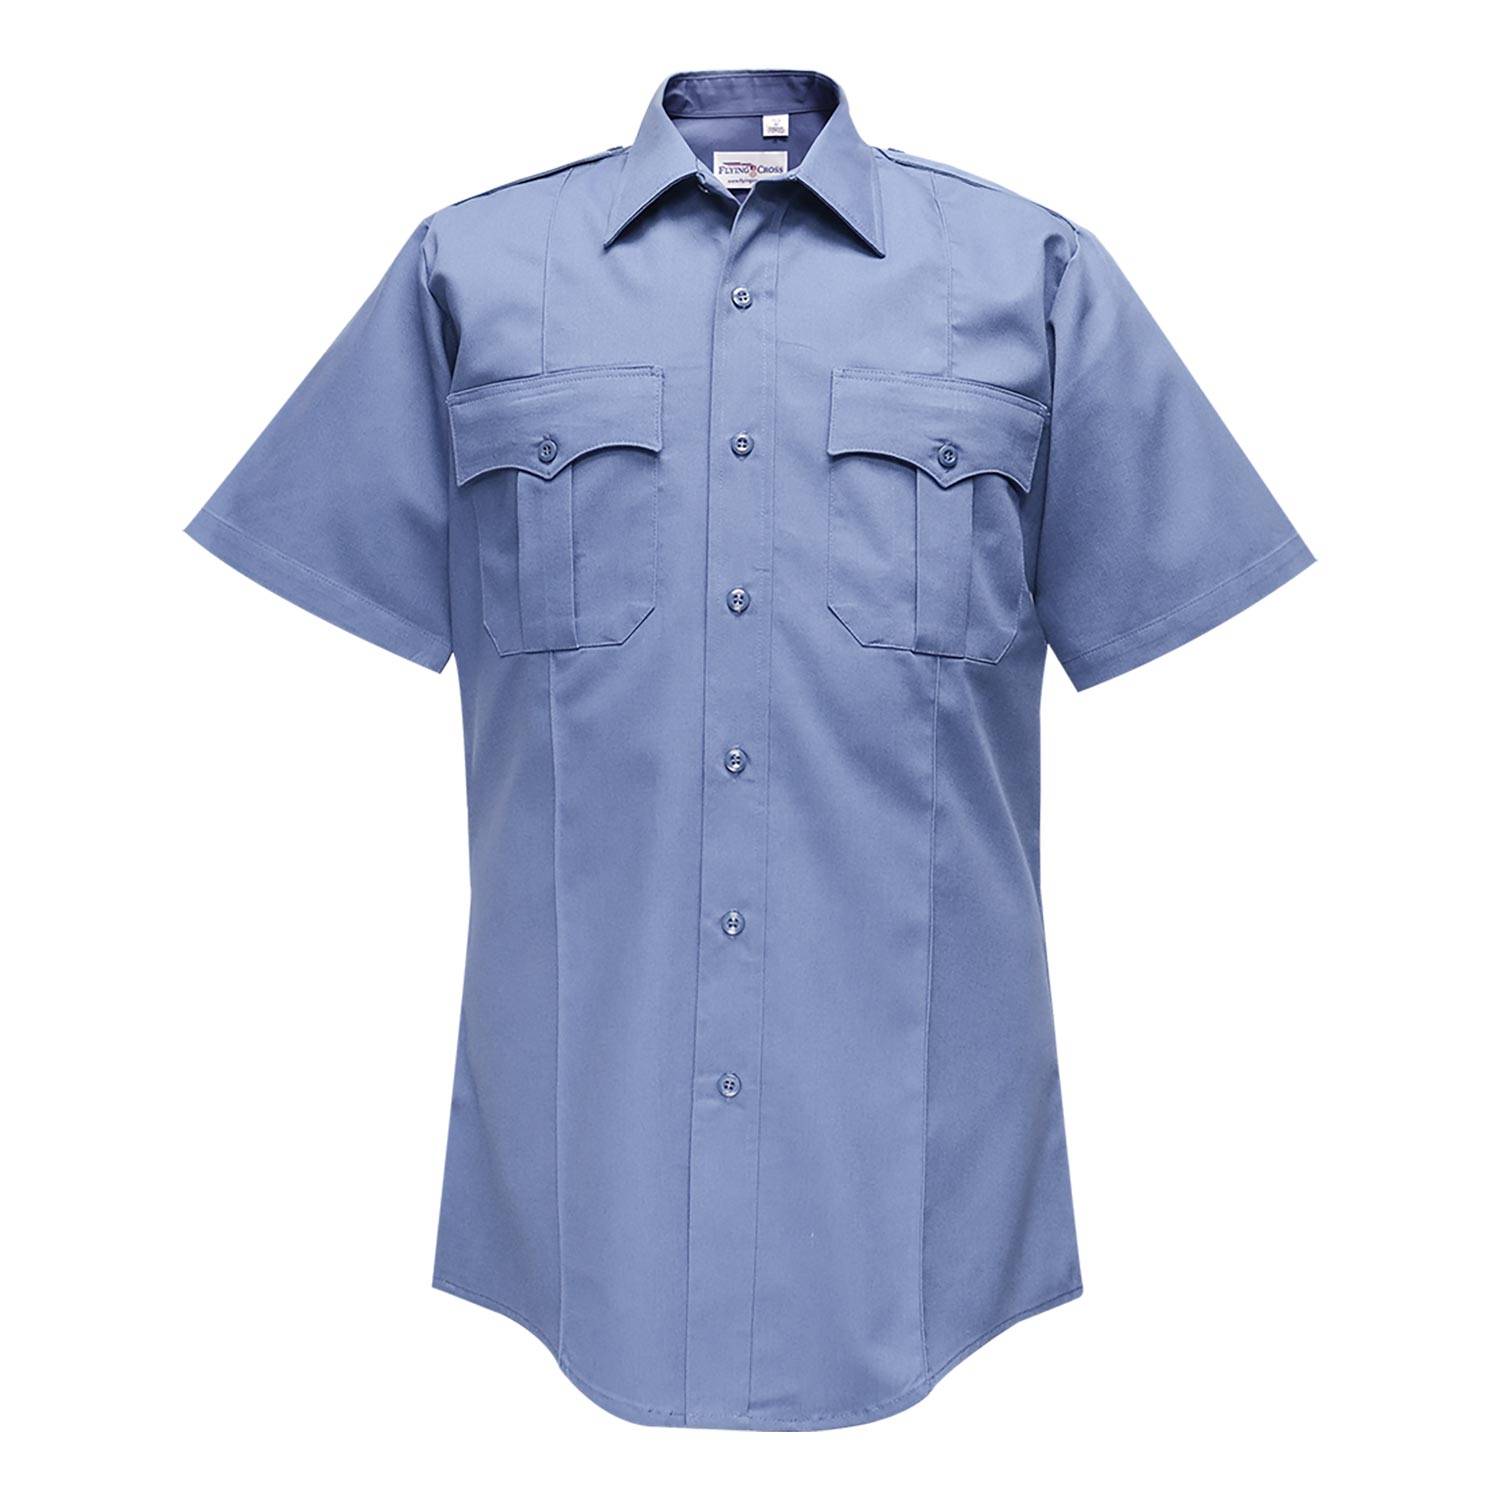 Flying Cross Men's Short Sleeve Uniform Shirt_EMS_FIRE_POLICE_Polyester/Cotton 